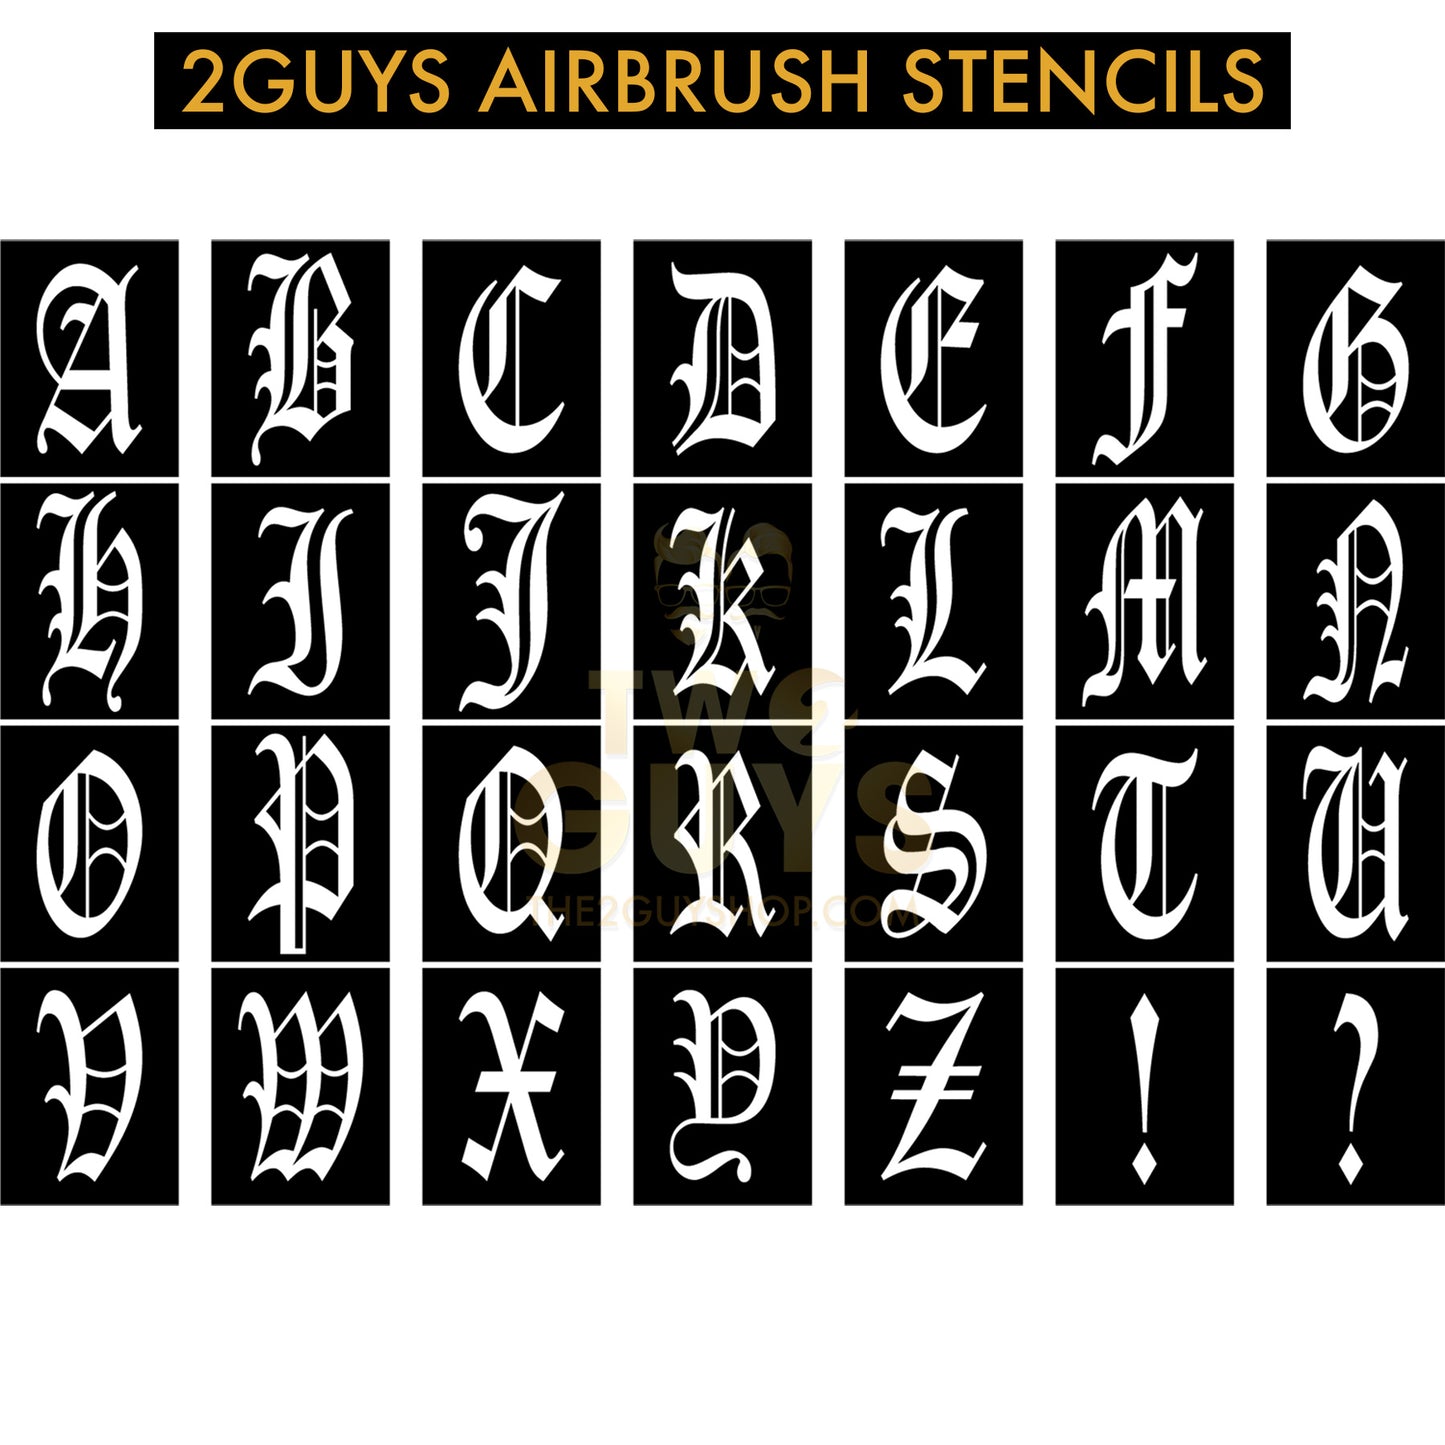 Old English Alphabet Airbrush Stencils